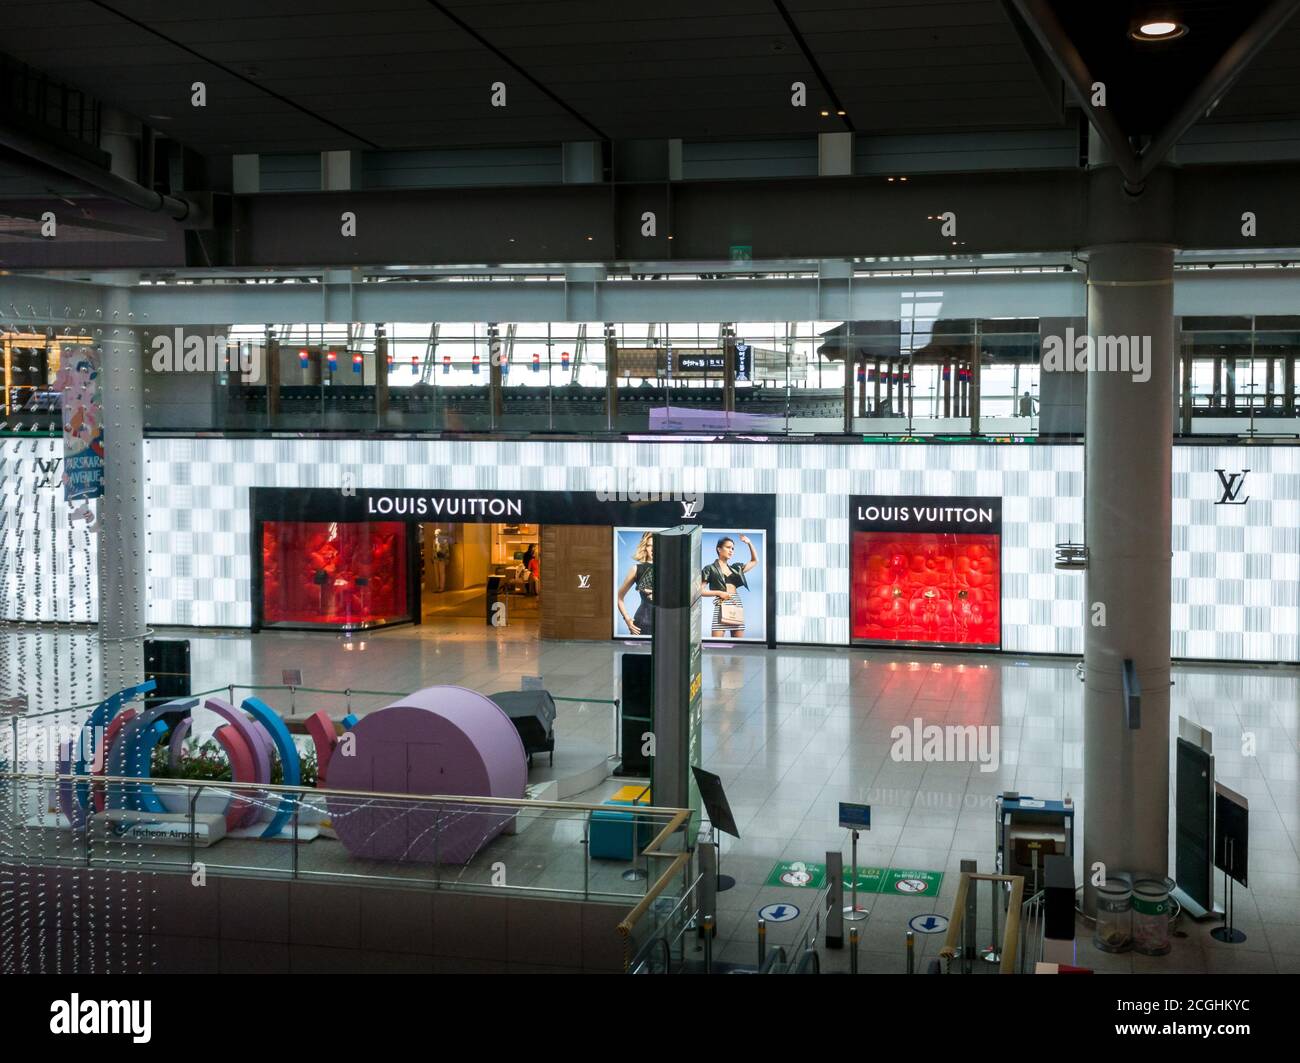 South Korea: Louis Vuitton shop in Seoul Stock Photo - Alamy